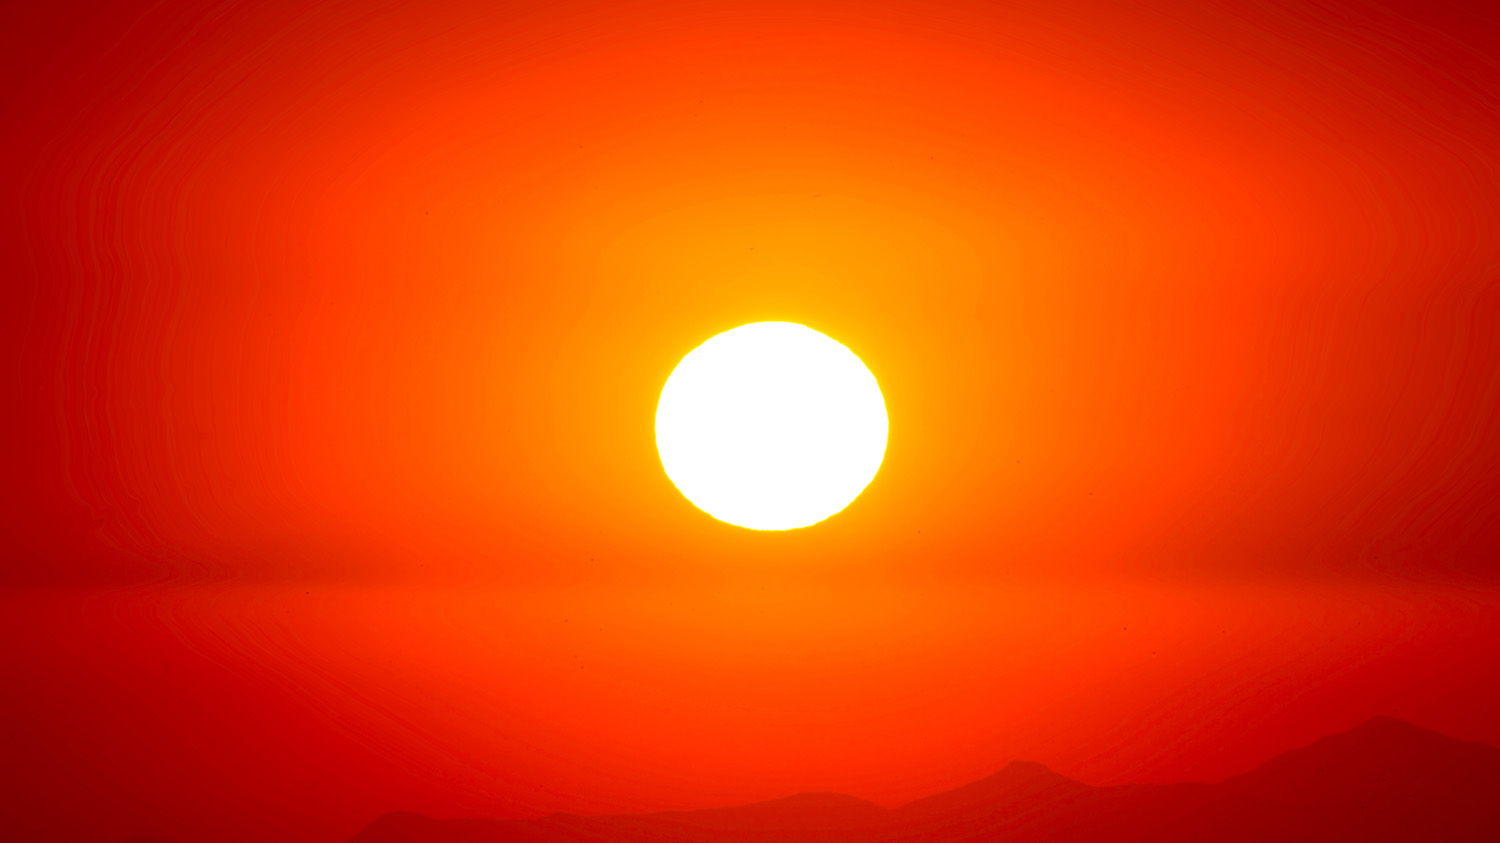 Stark sol på röd och orange himmel med horisont i nederkant